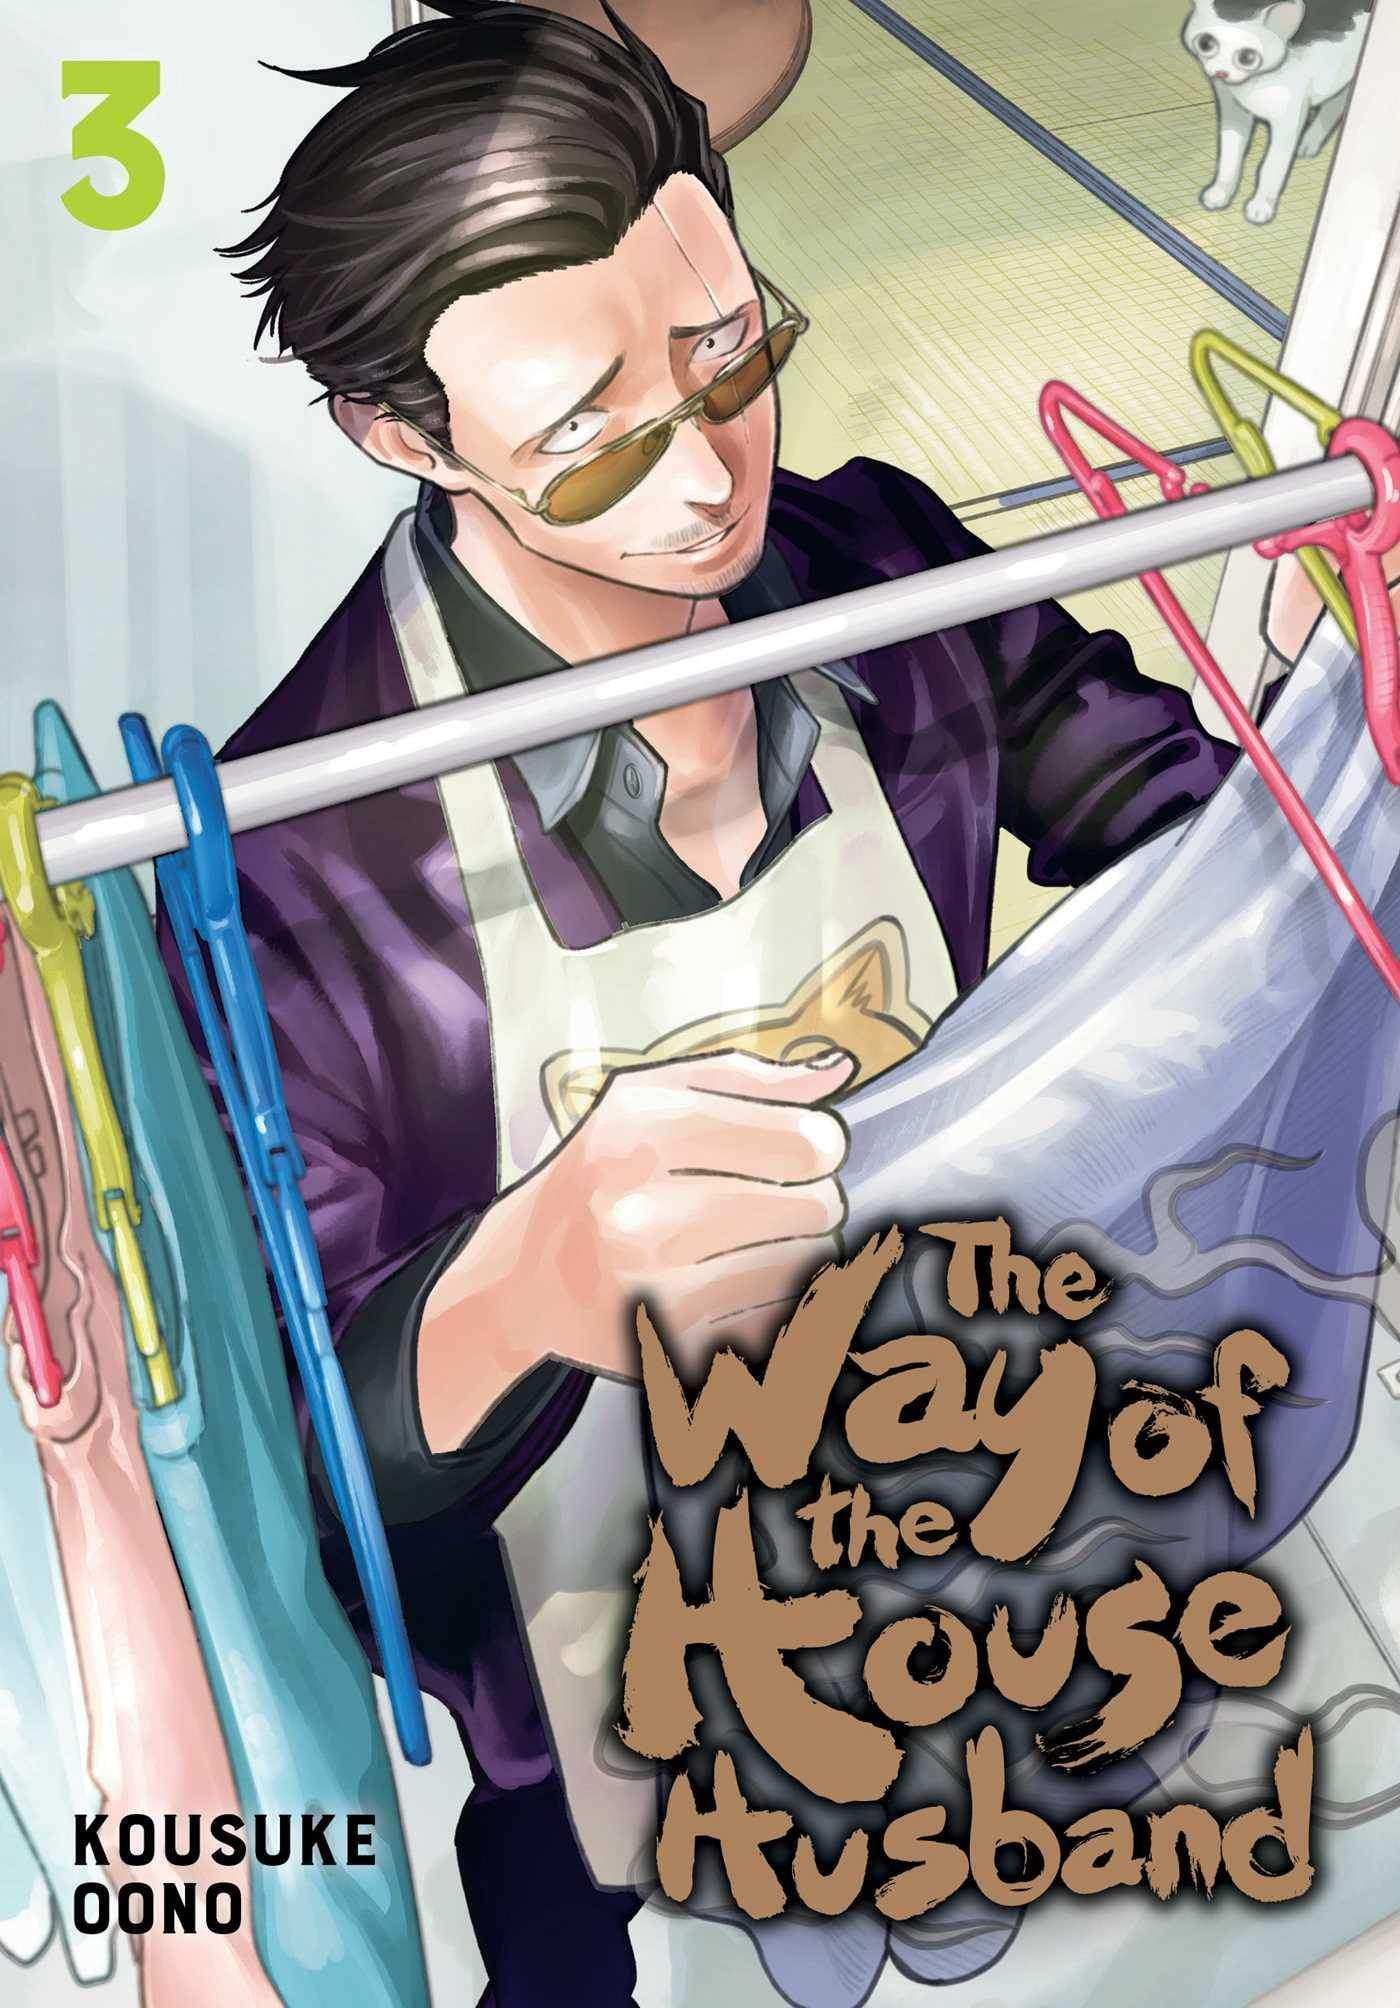 The Way of the Househusband (Manga) Vol. 3 - Tankobonbon